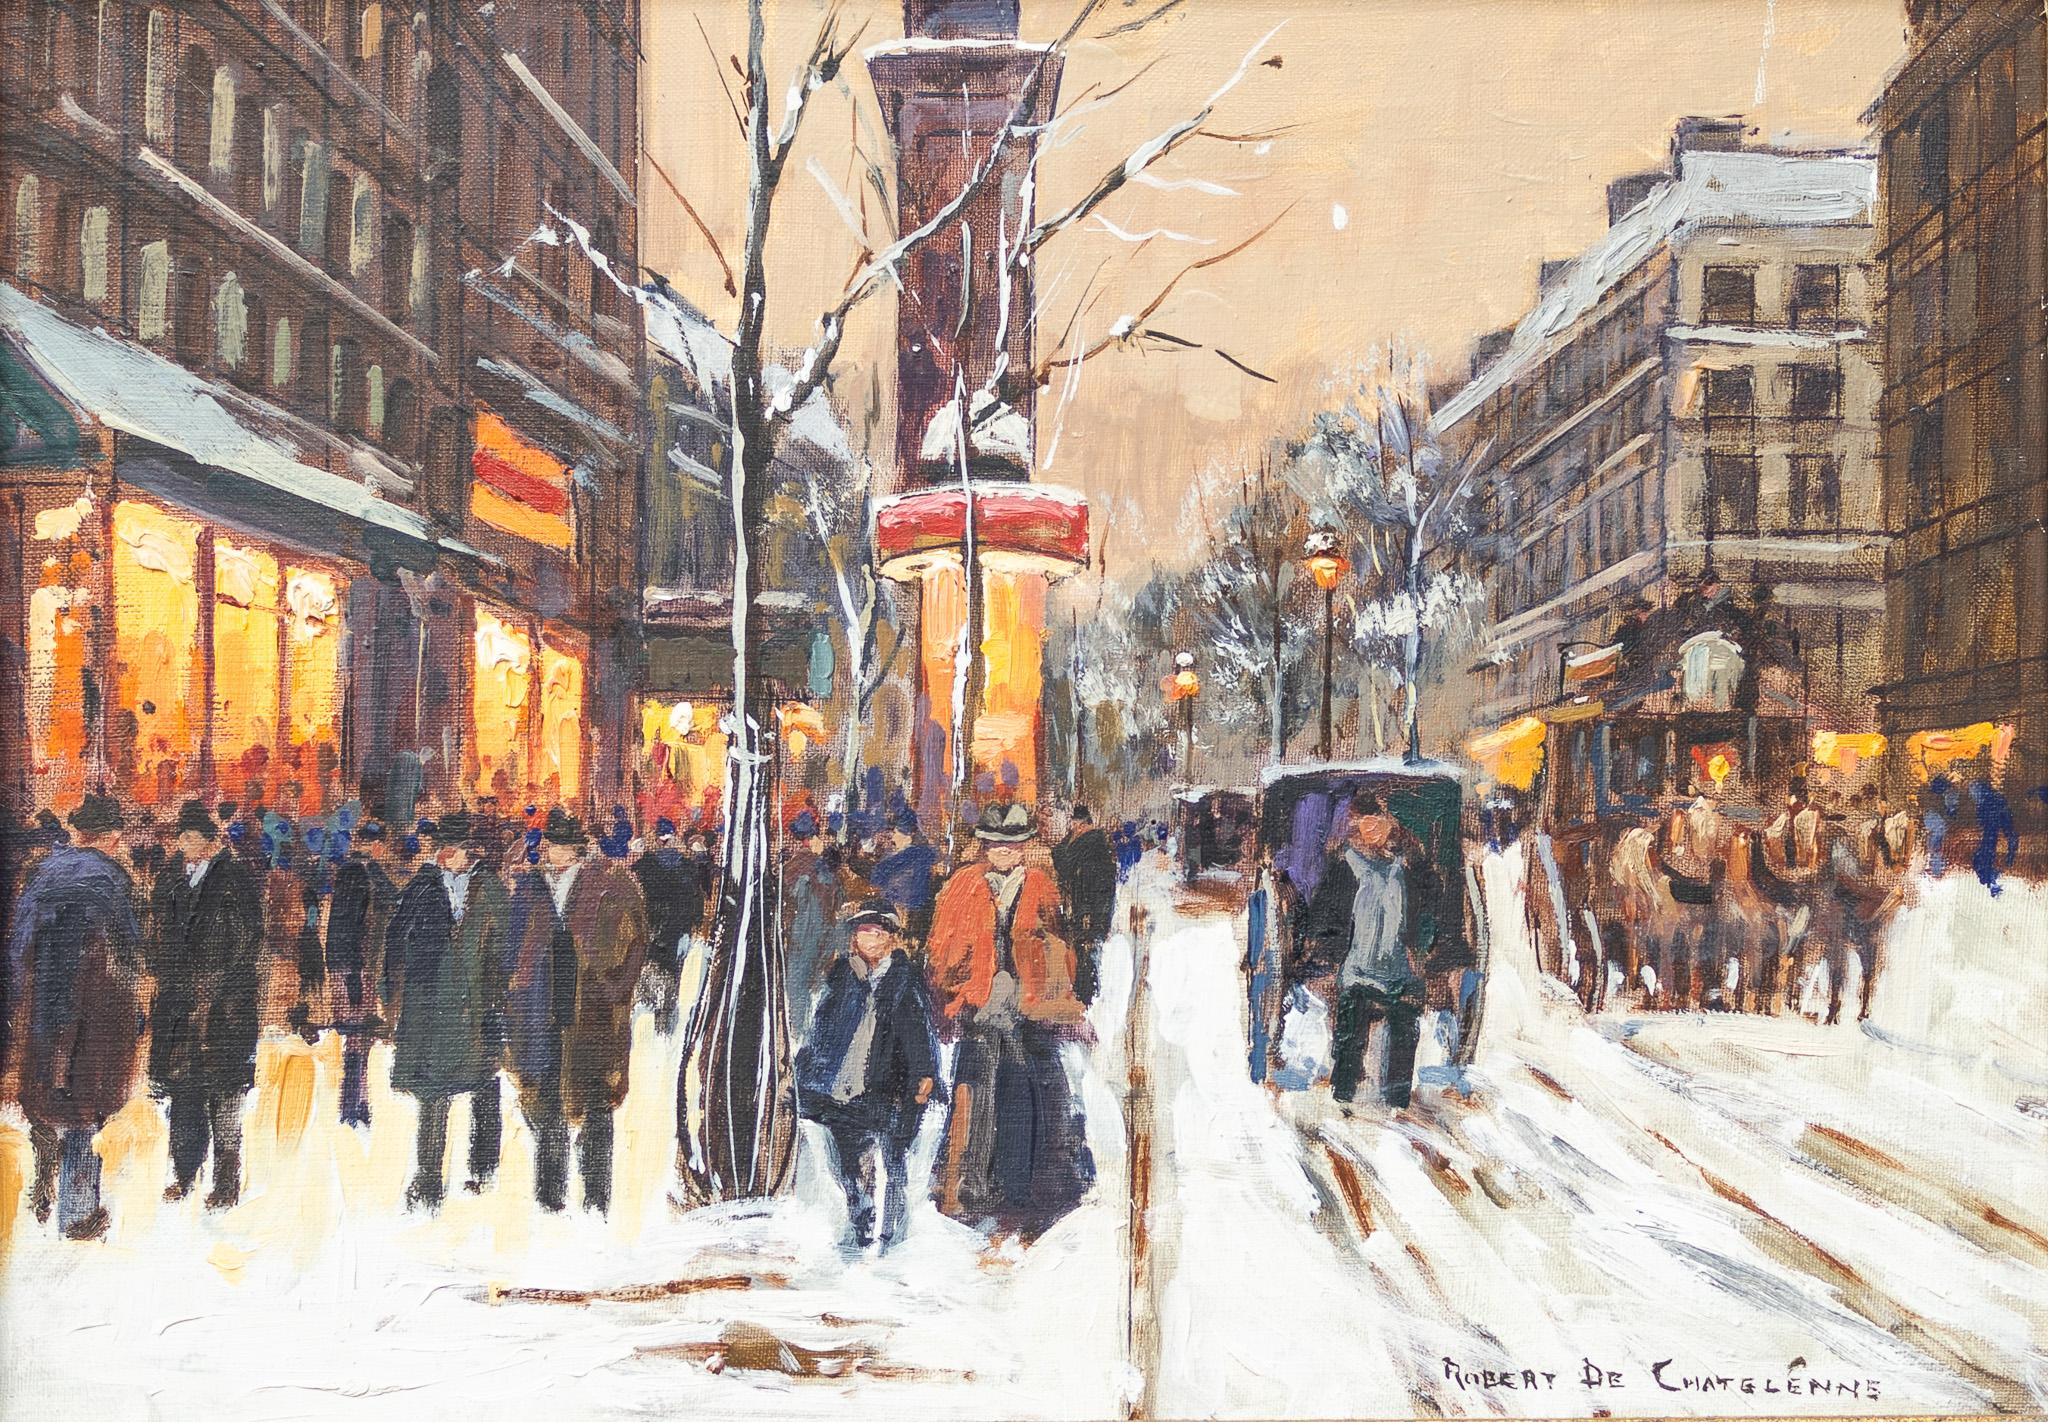 Parisian Winter Street Scene - Painting by Robert De Chatelenne